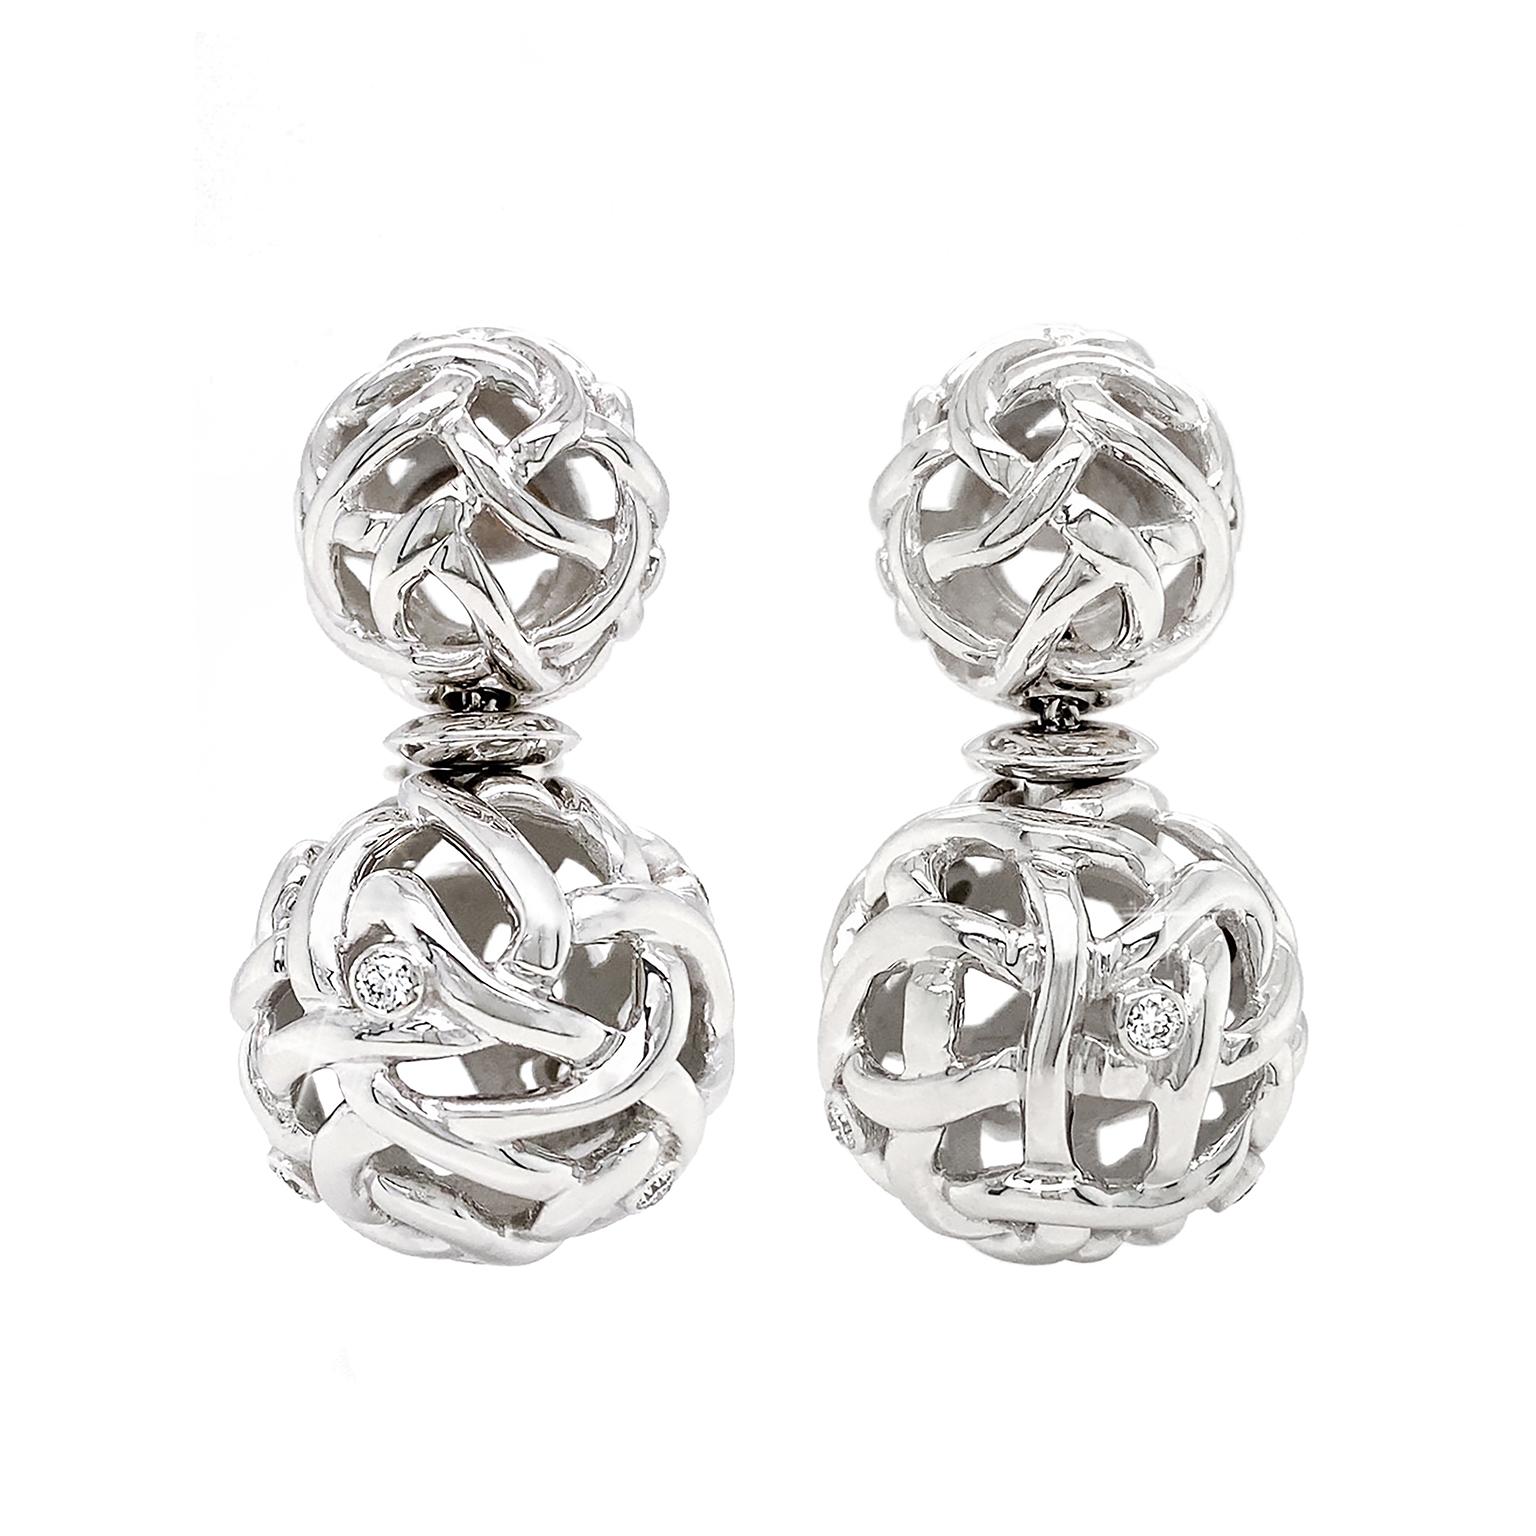 Brilliant Cut Woven Ball 18K White Gold Diamond Earrings 